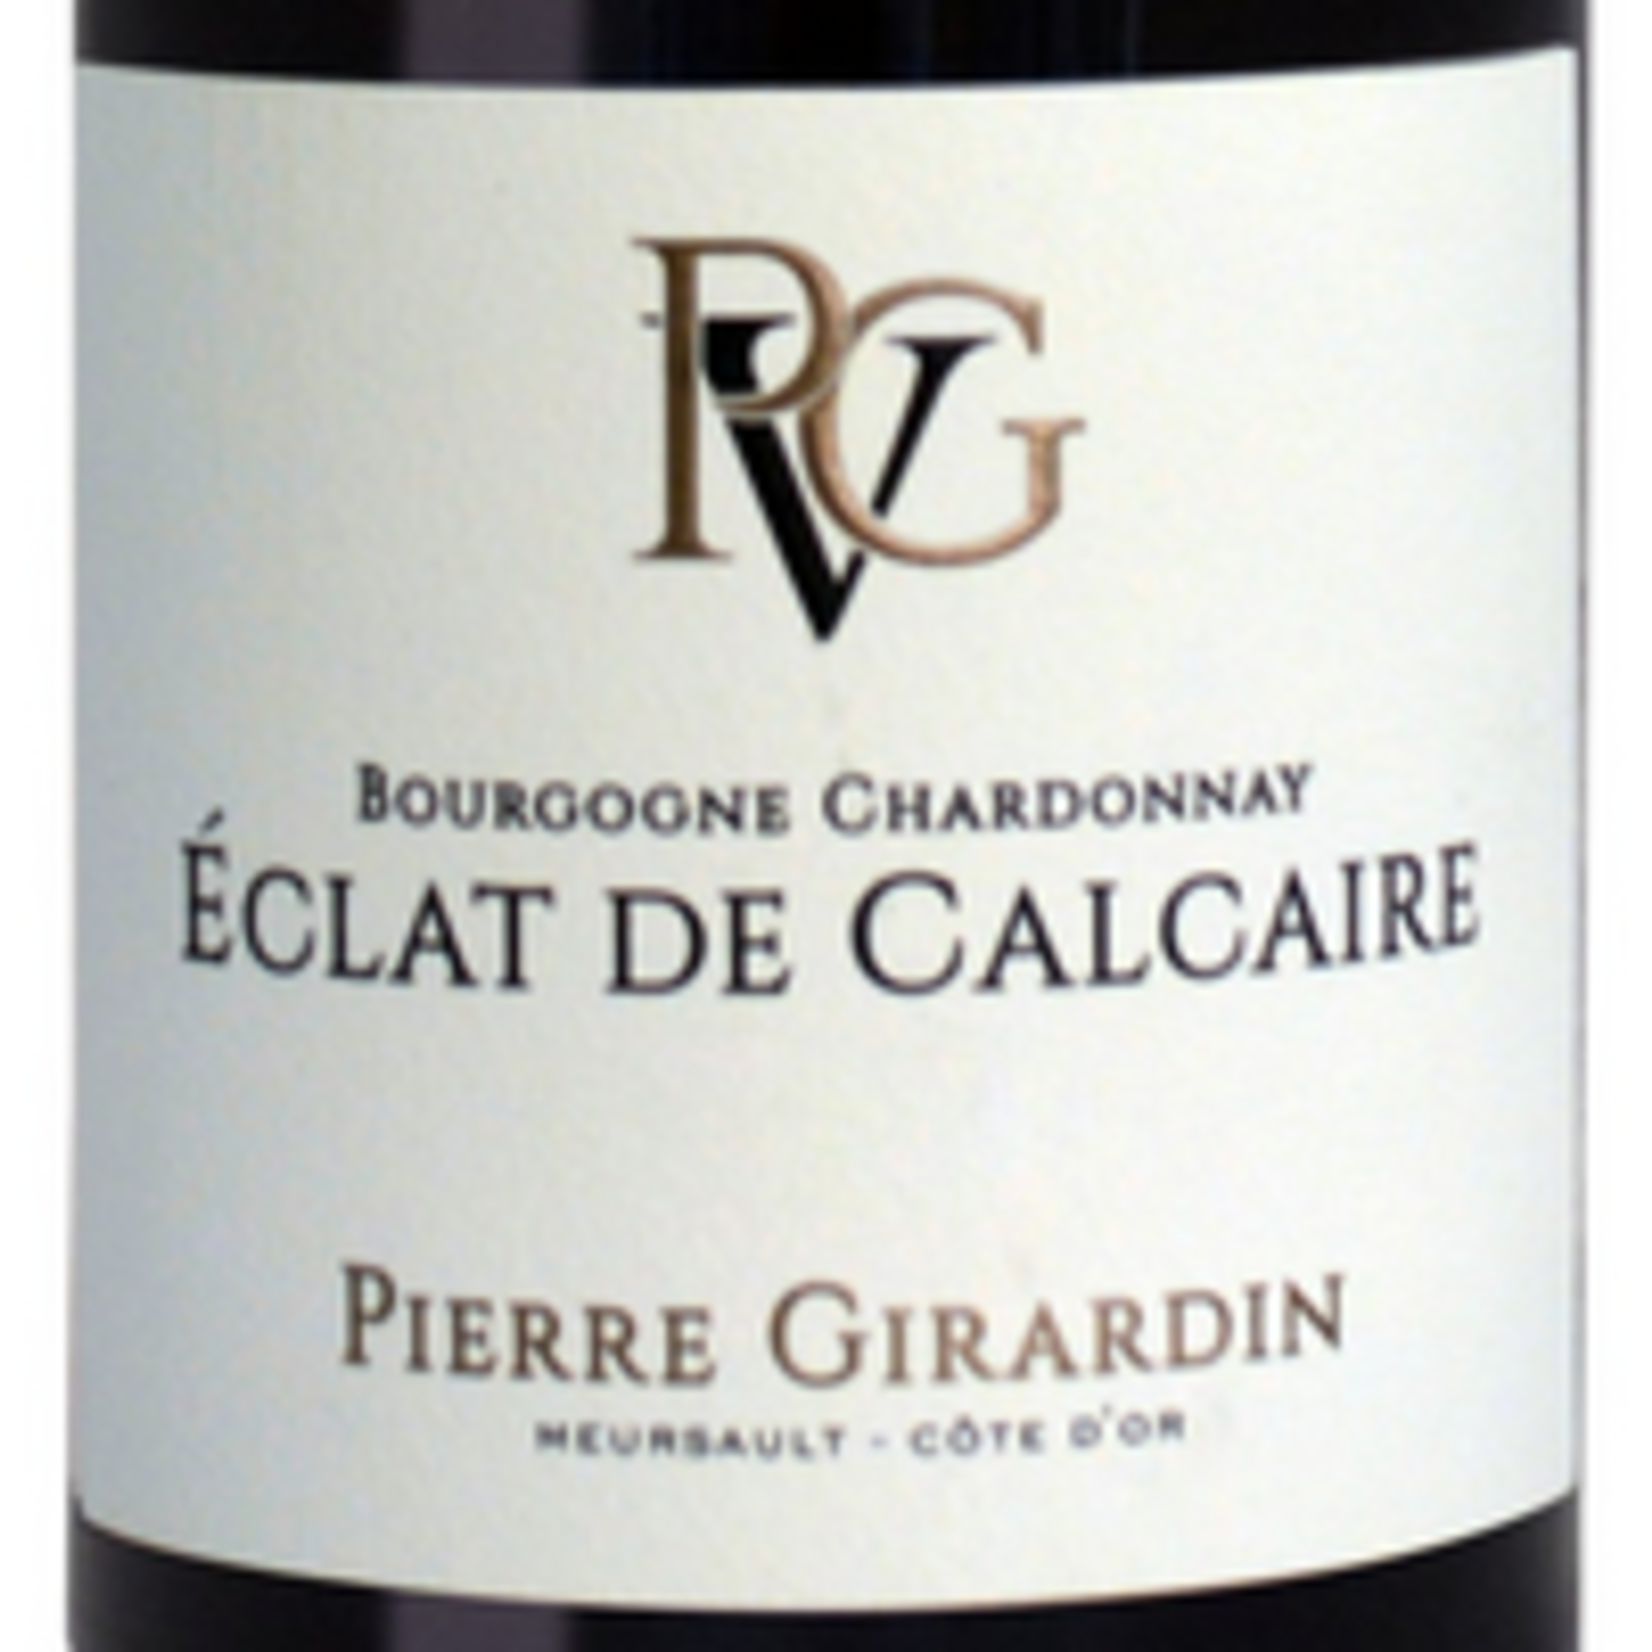 Pierre Girardin Pierre Girardin Bourgogne Chardonnay Eclat de Calcaire 2021  France